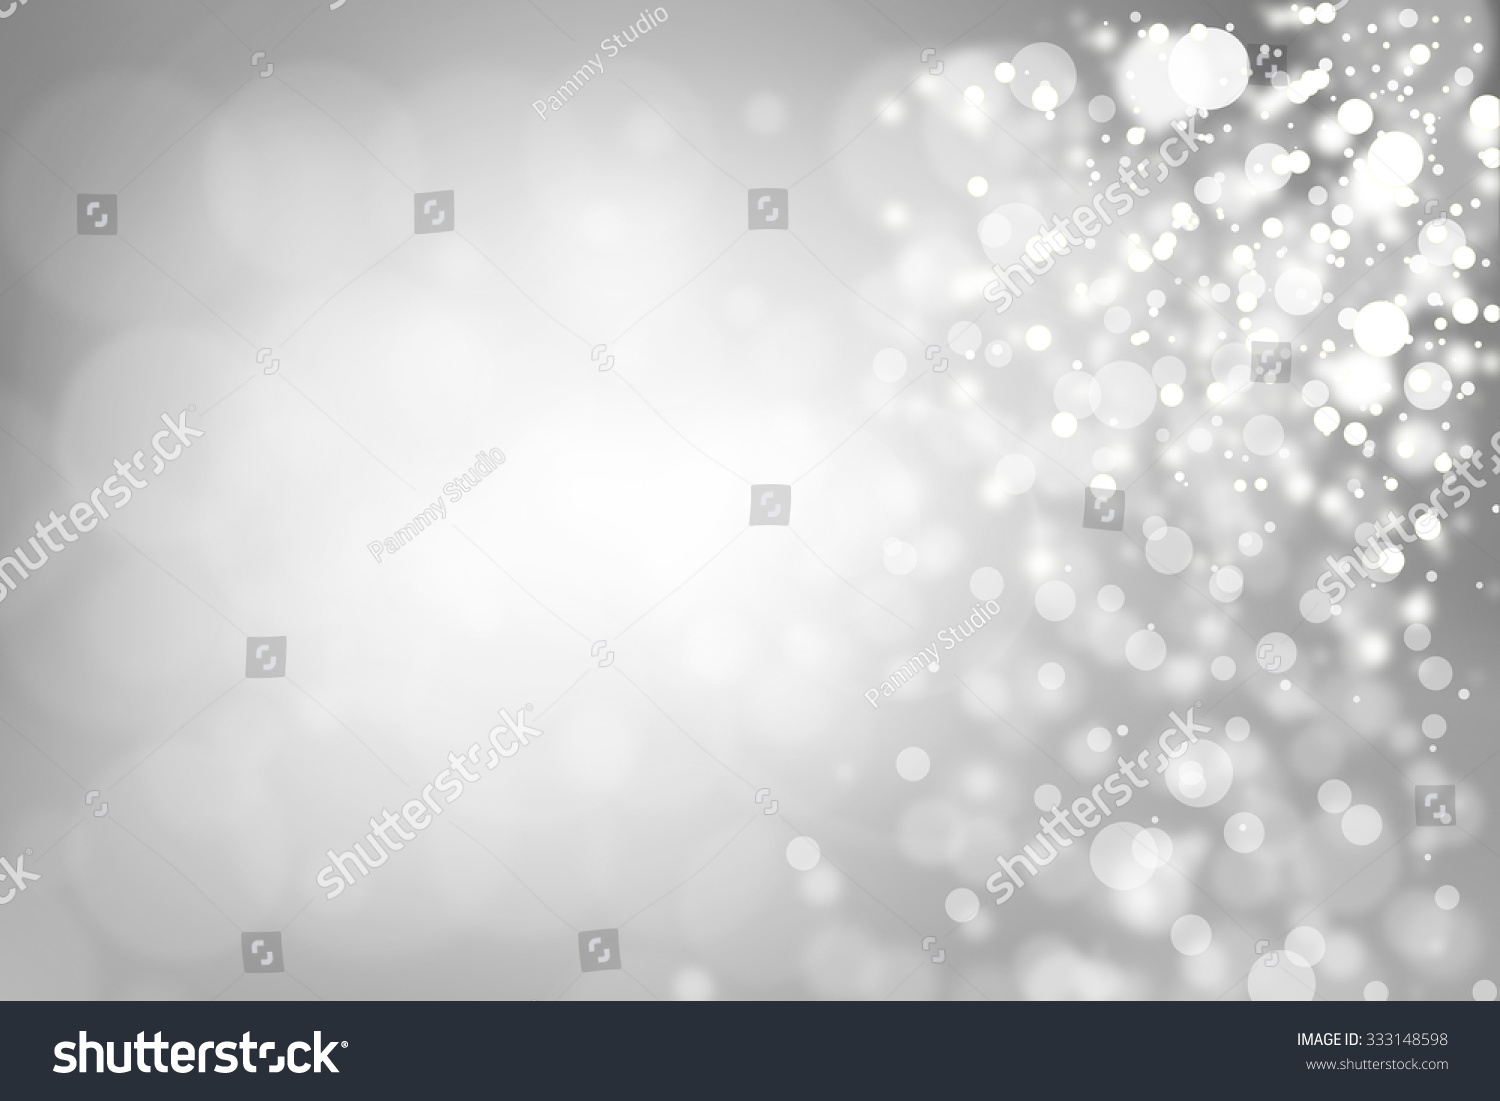 Gray Blurred Background Stock Photo 333148598 : Shutterstock